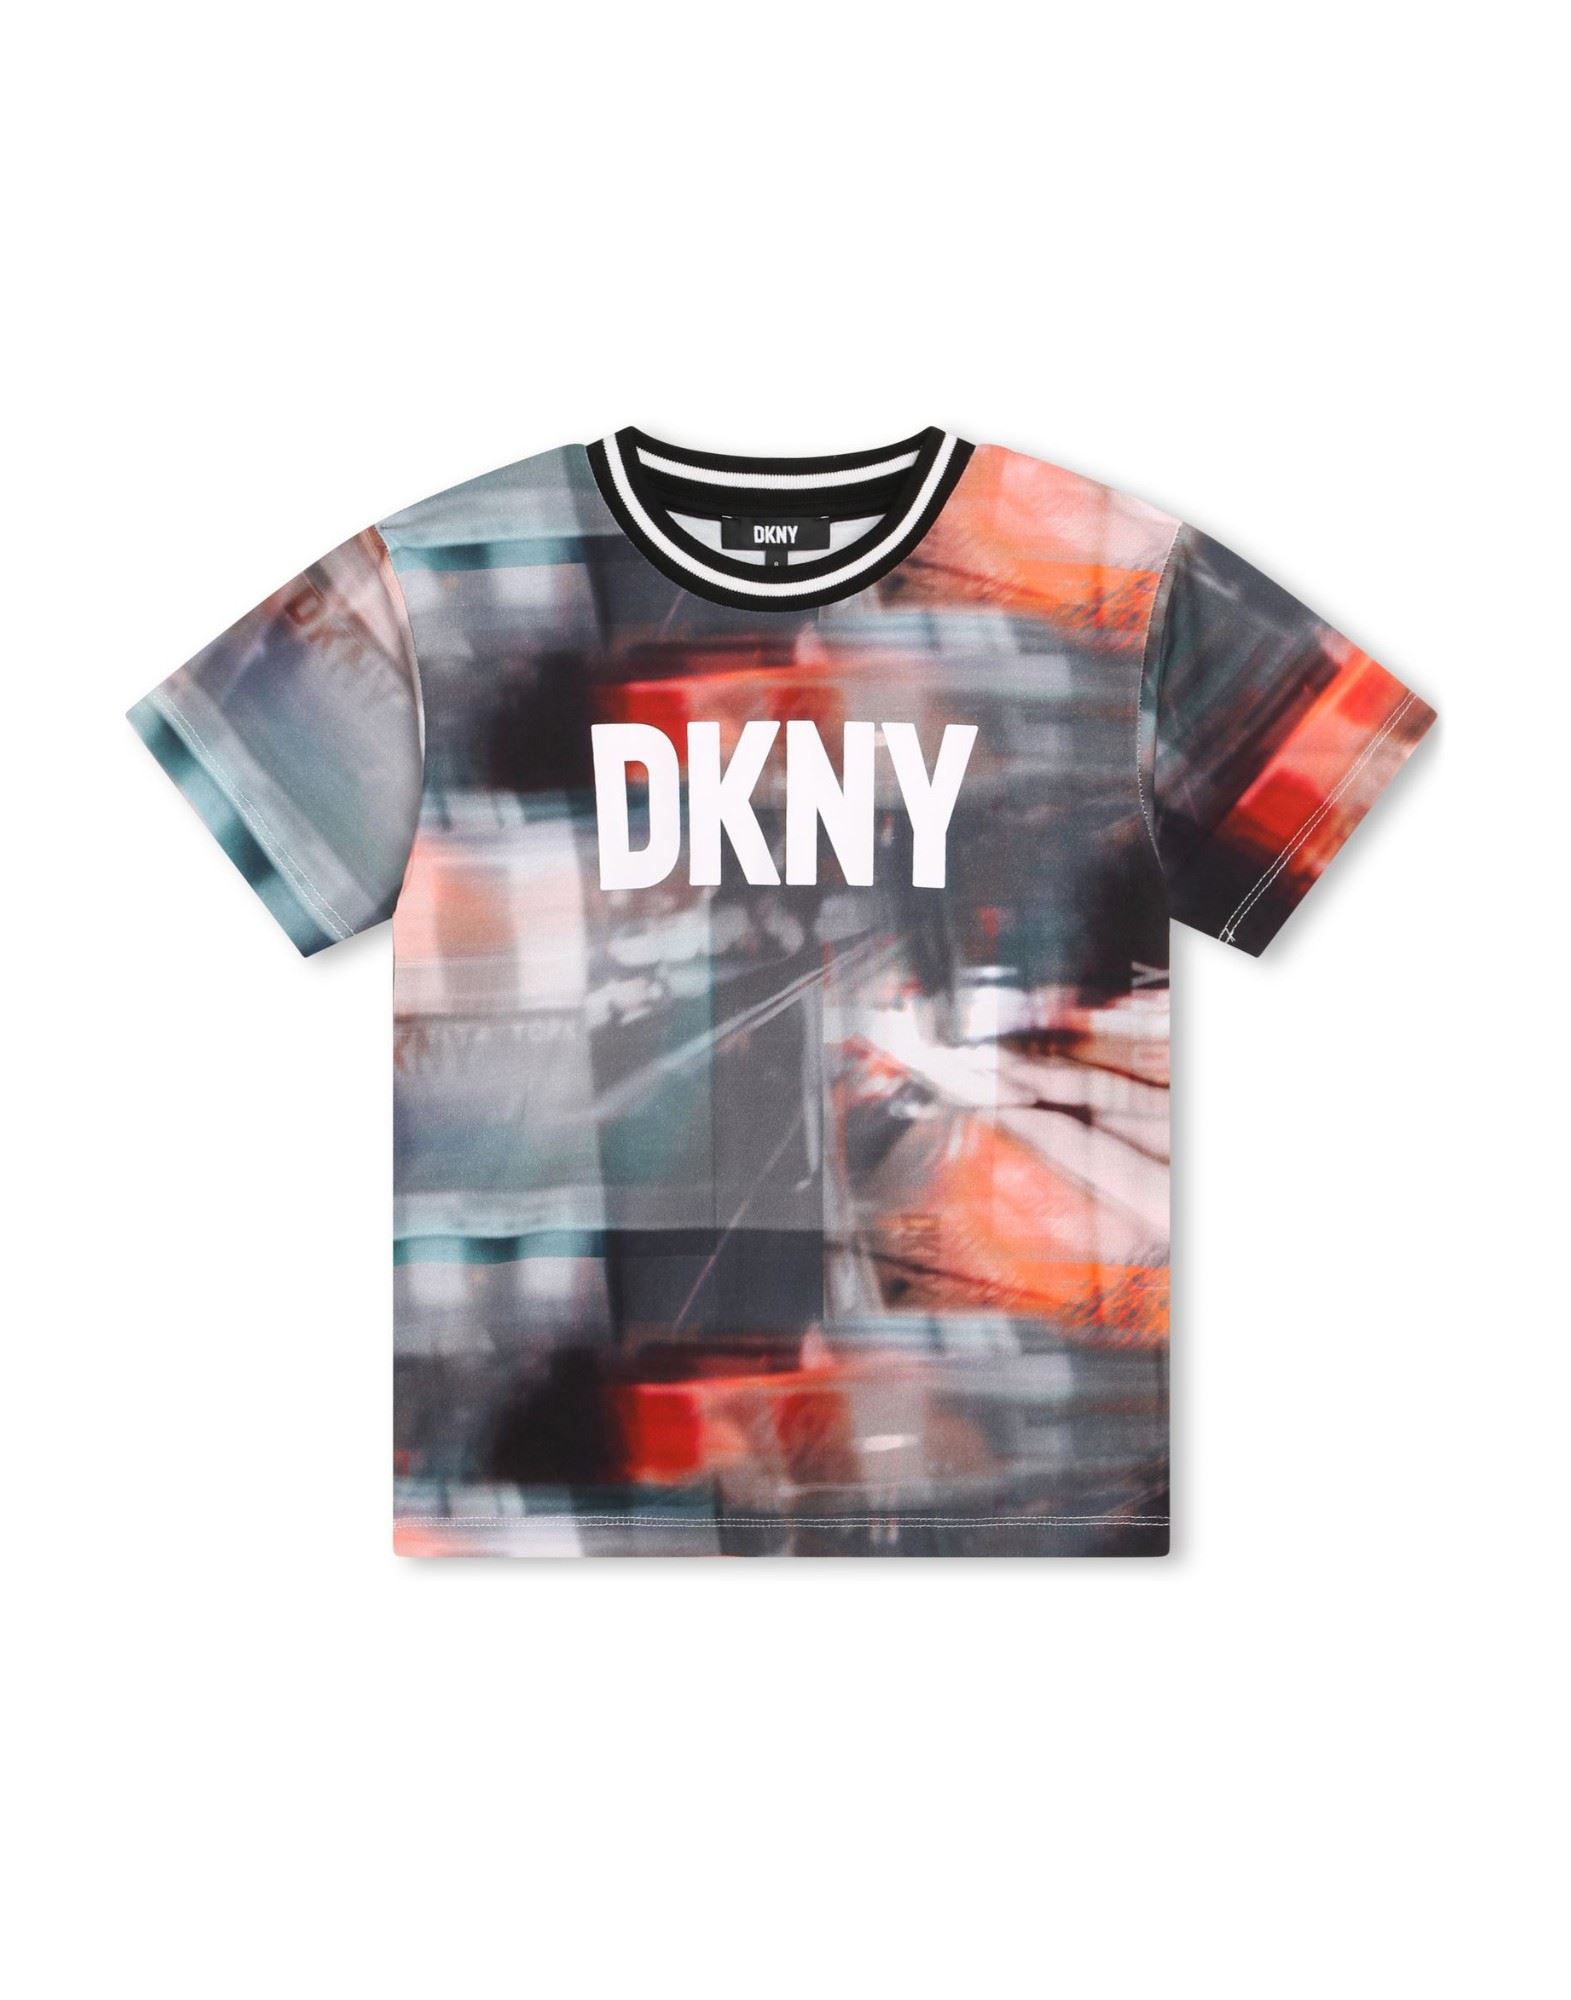 DKNY T-shirts Kinder Bunt von DKNY